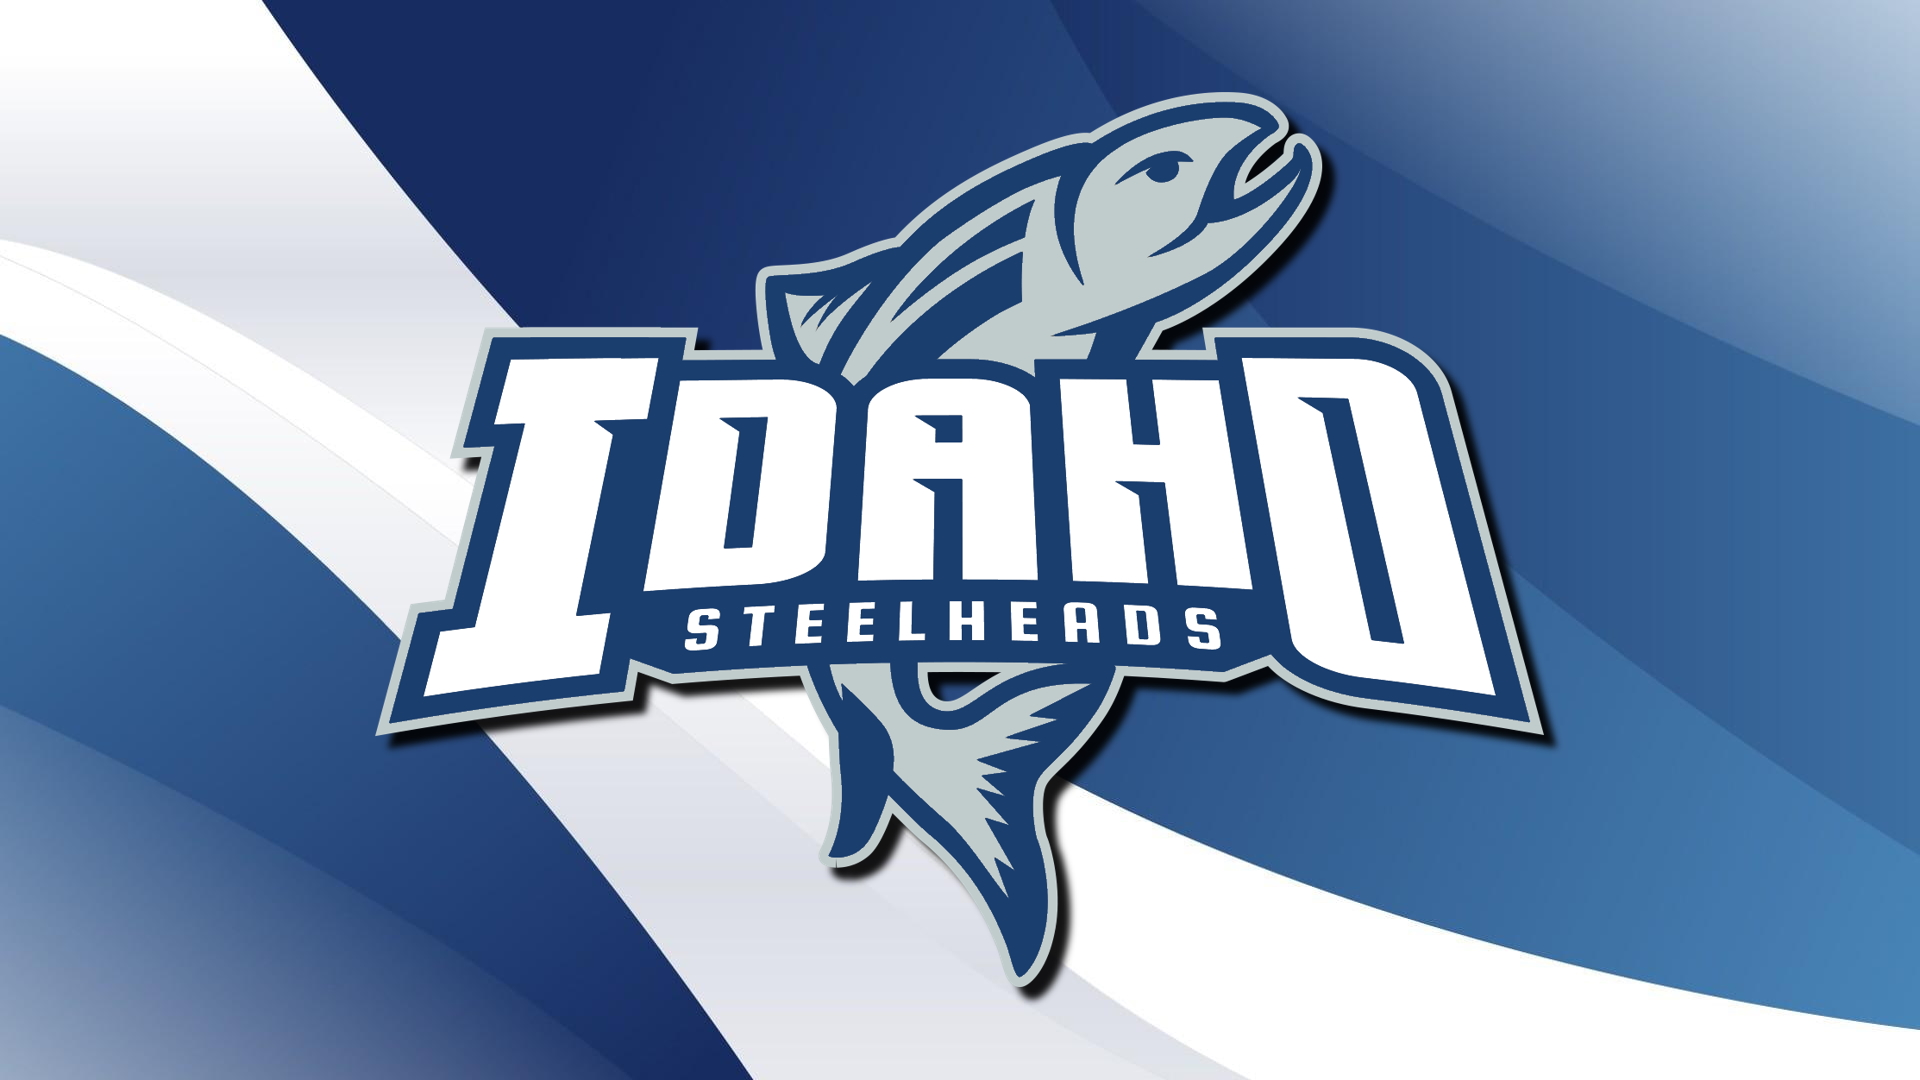 Hockey, Minor League, Idaho Steelheads, ECHL, logo 1920x1080